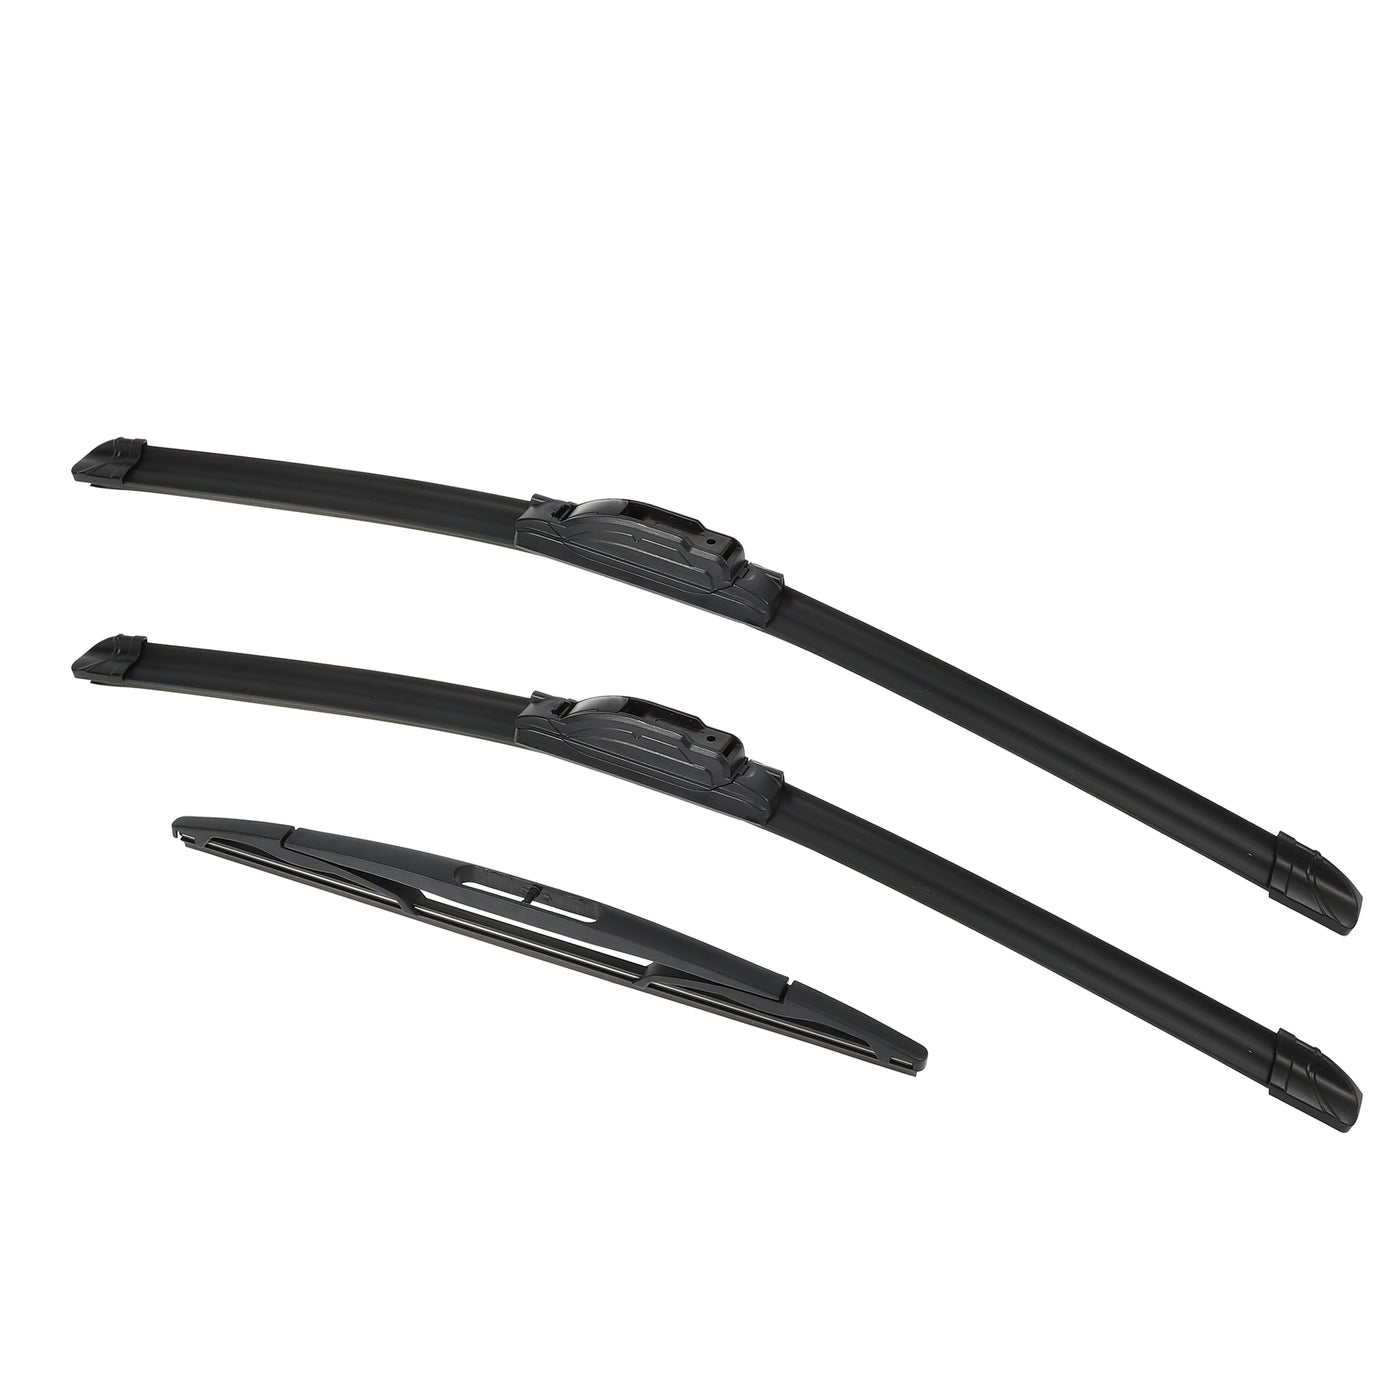 ACROPIX Front Rear Windshield Wiper Blade Set Car Wiper Blade Fit for GMC Yukon 2007-2014 - Pack of 3 Black